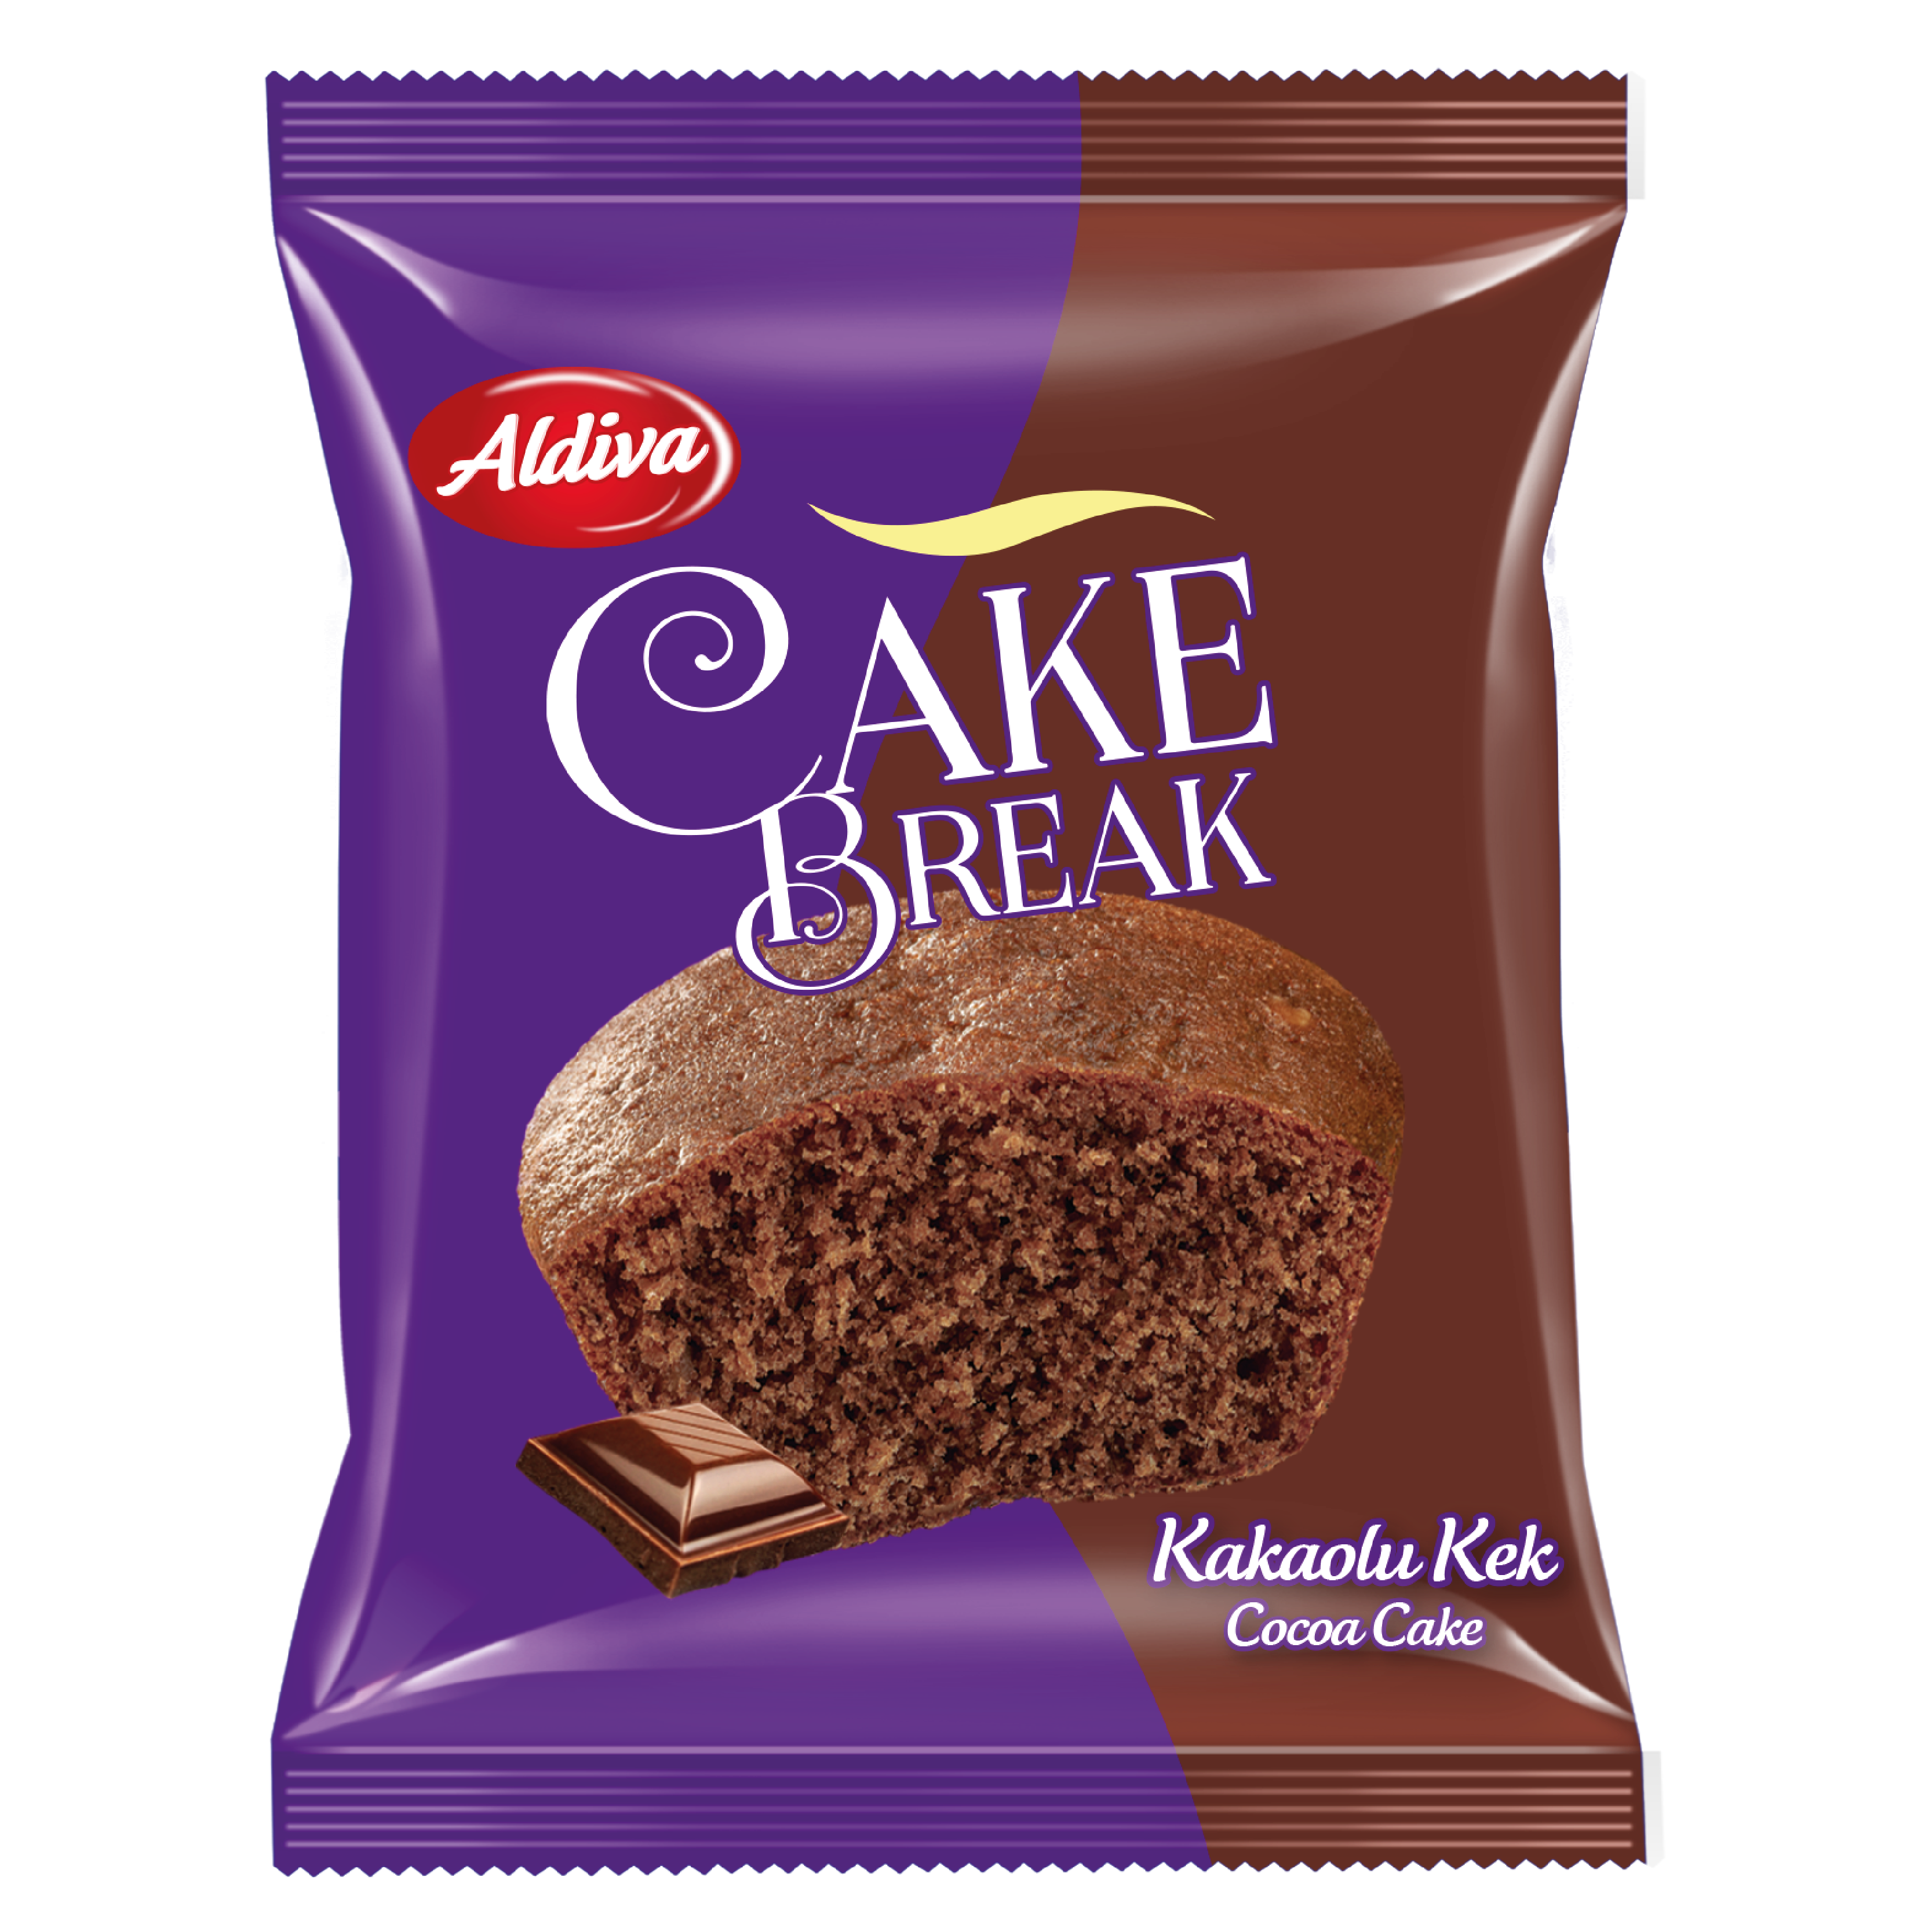 Cake Break Muffin Kakaolu Kek 25g